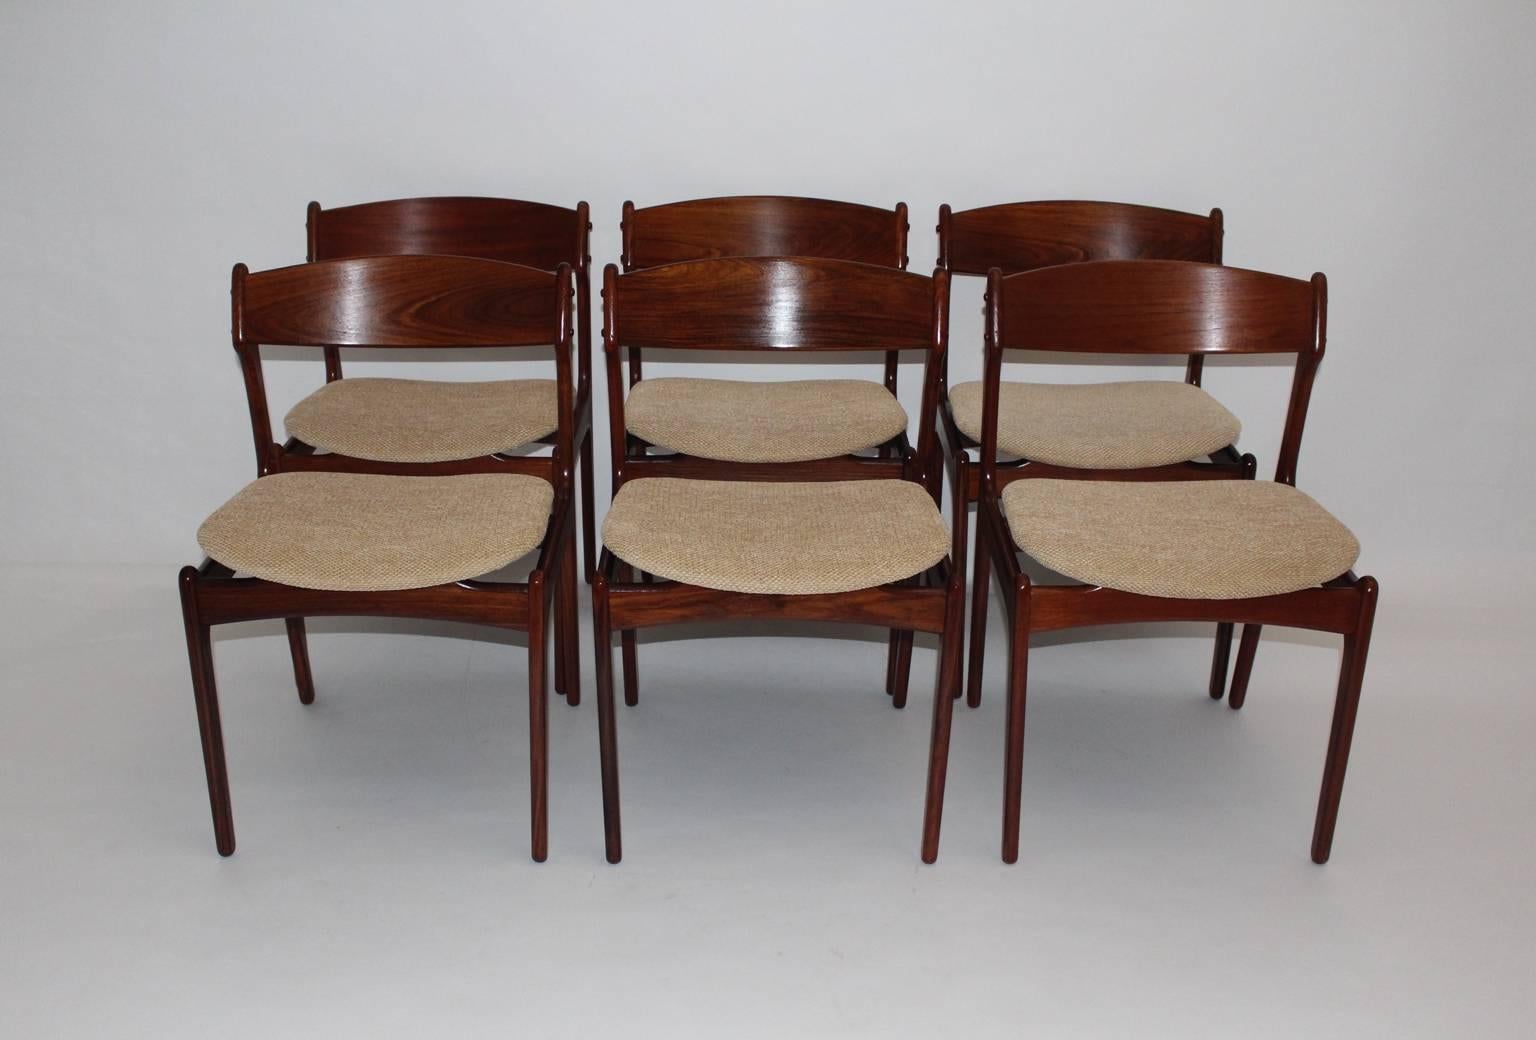 20th Century Scandinavian Modern Vintage Six Teak Dining Chairs Erik Buck, 1967, Denmark